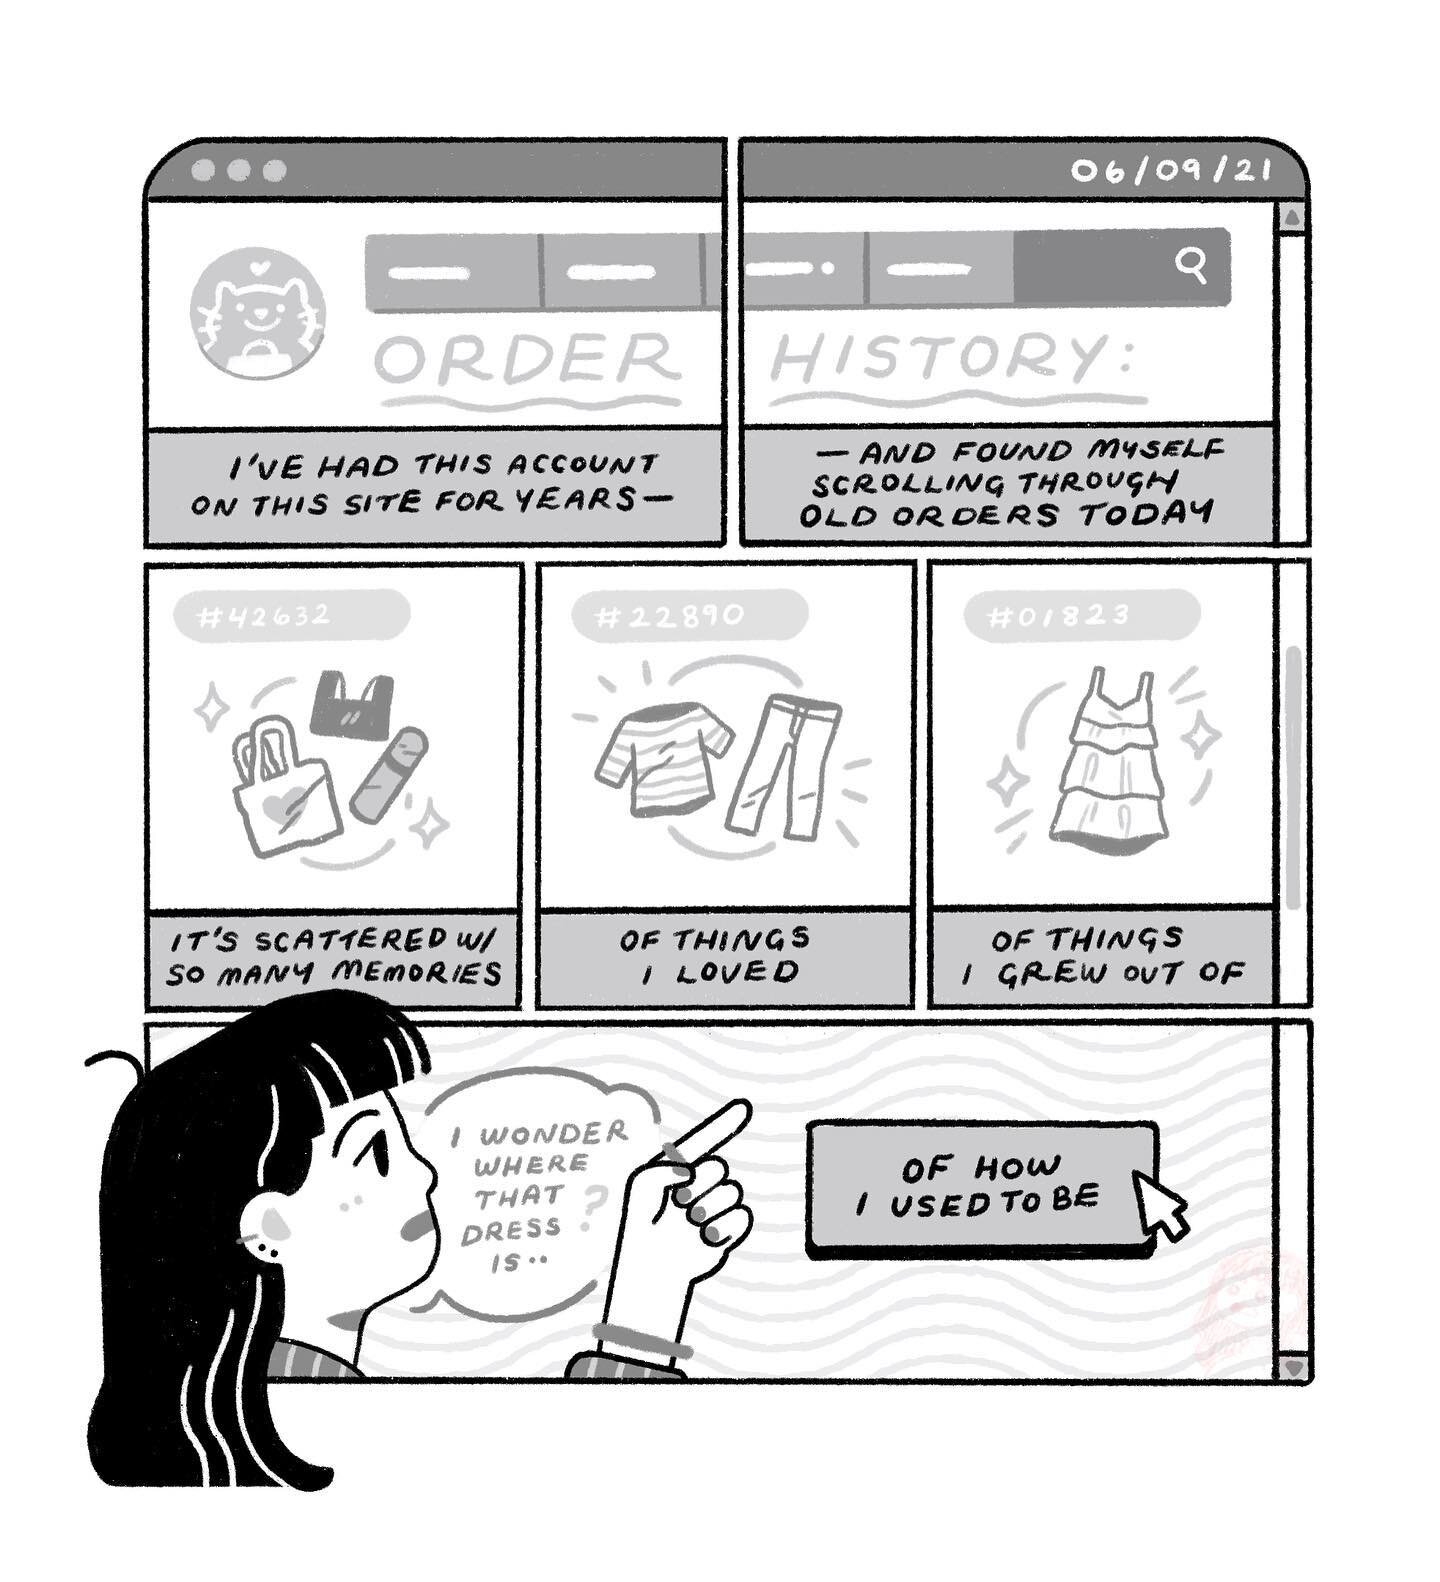 diary comic / 06.09.21 - aya stop online shopping challenge
&nbsp; ⠀⠀⠀⠀⠀⠀⠀⠀⠀⠀⠀⠀

&nbsp; ⠀⠀⠀⠀⠀⠀⠀⠀⠀⠀⠀⠀
⠀⠀⠀⠀
#illust #イラスト #comic #artph #girl #diarycomic